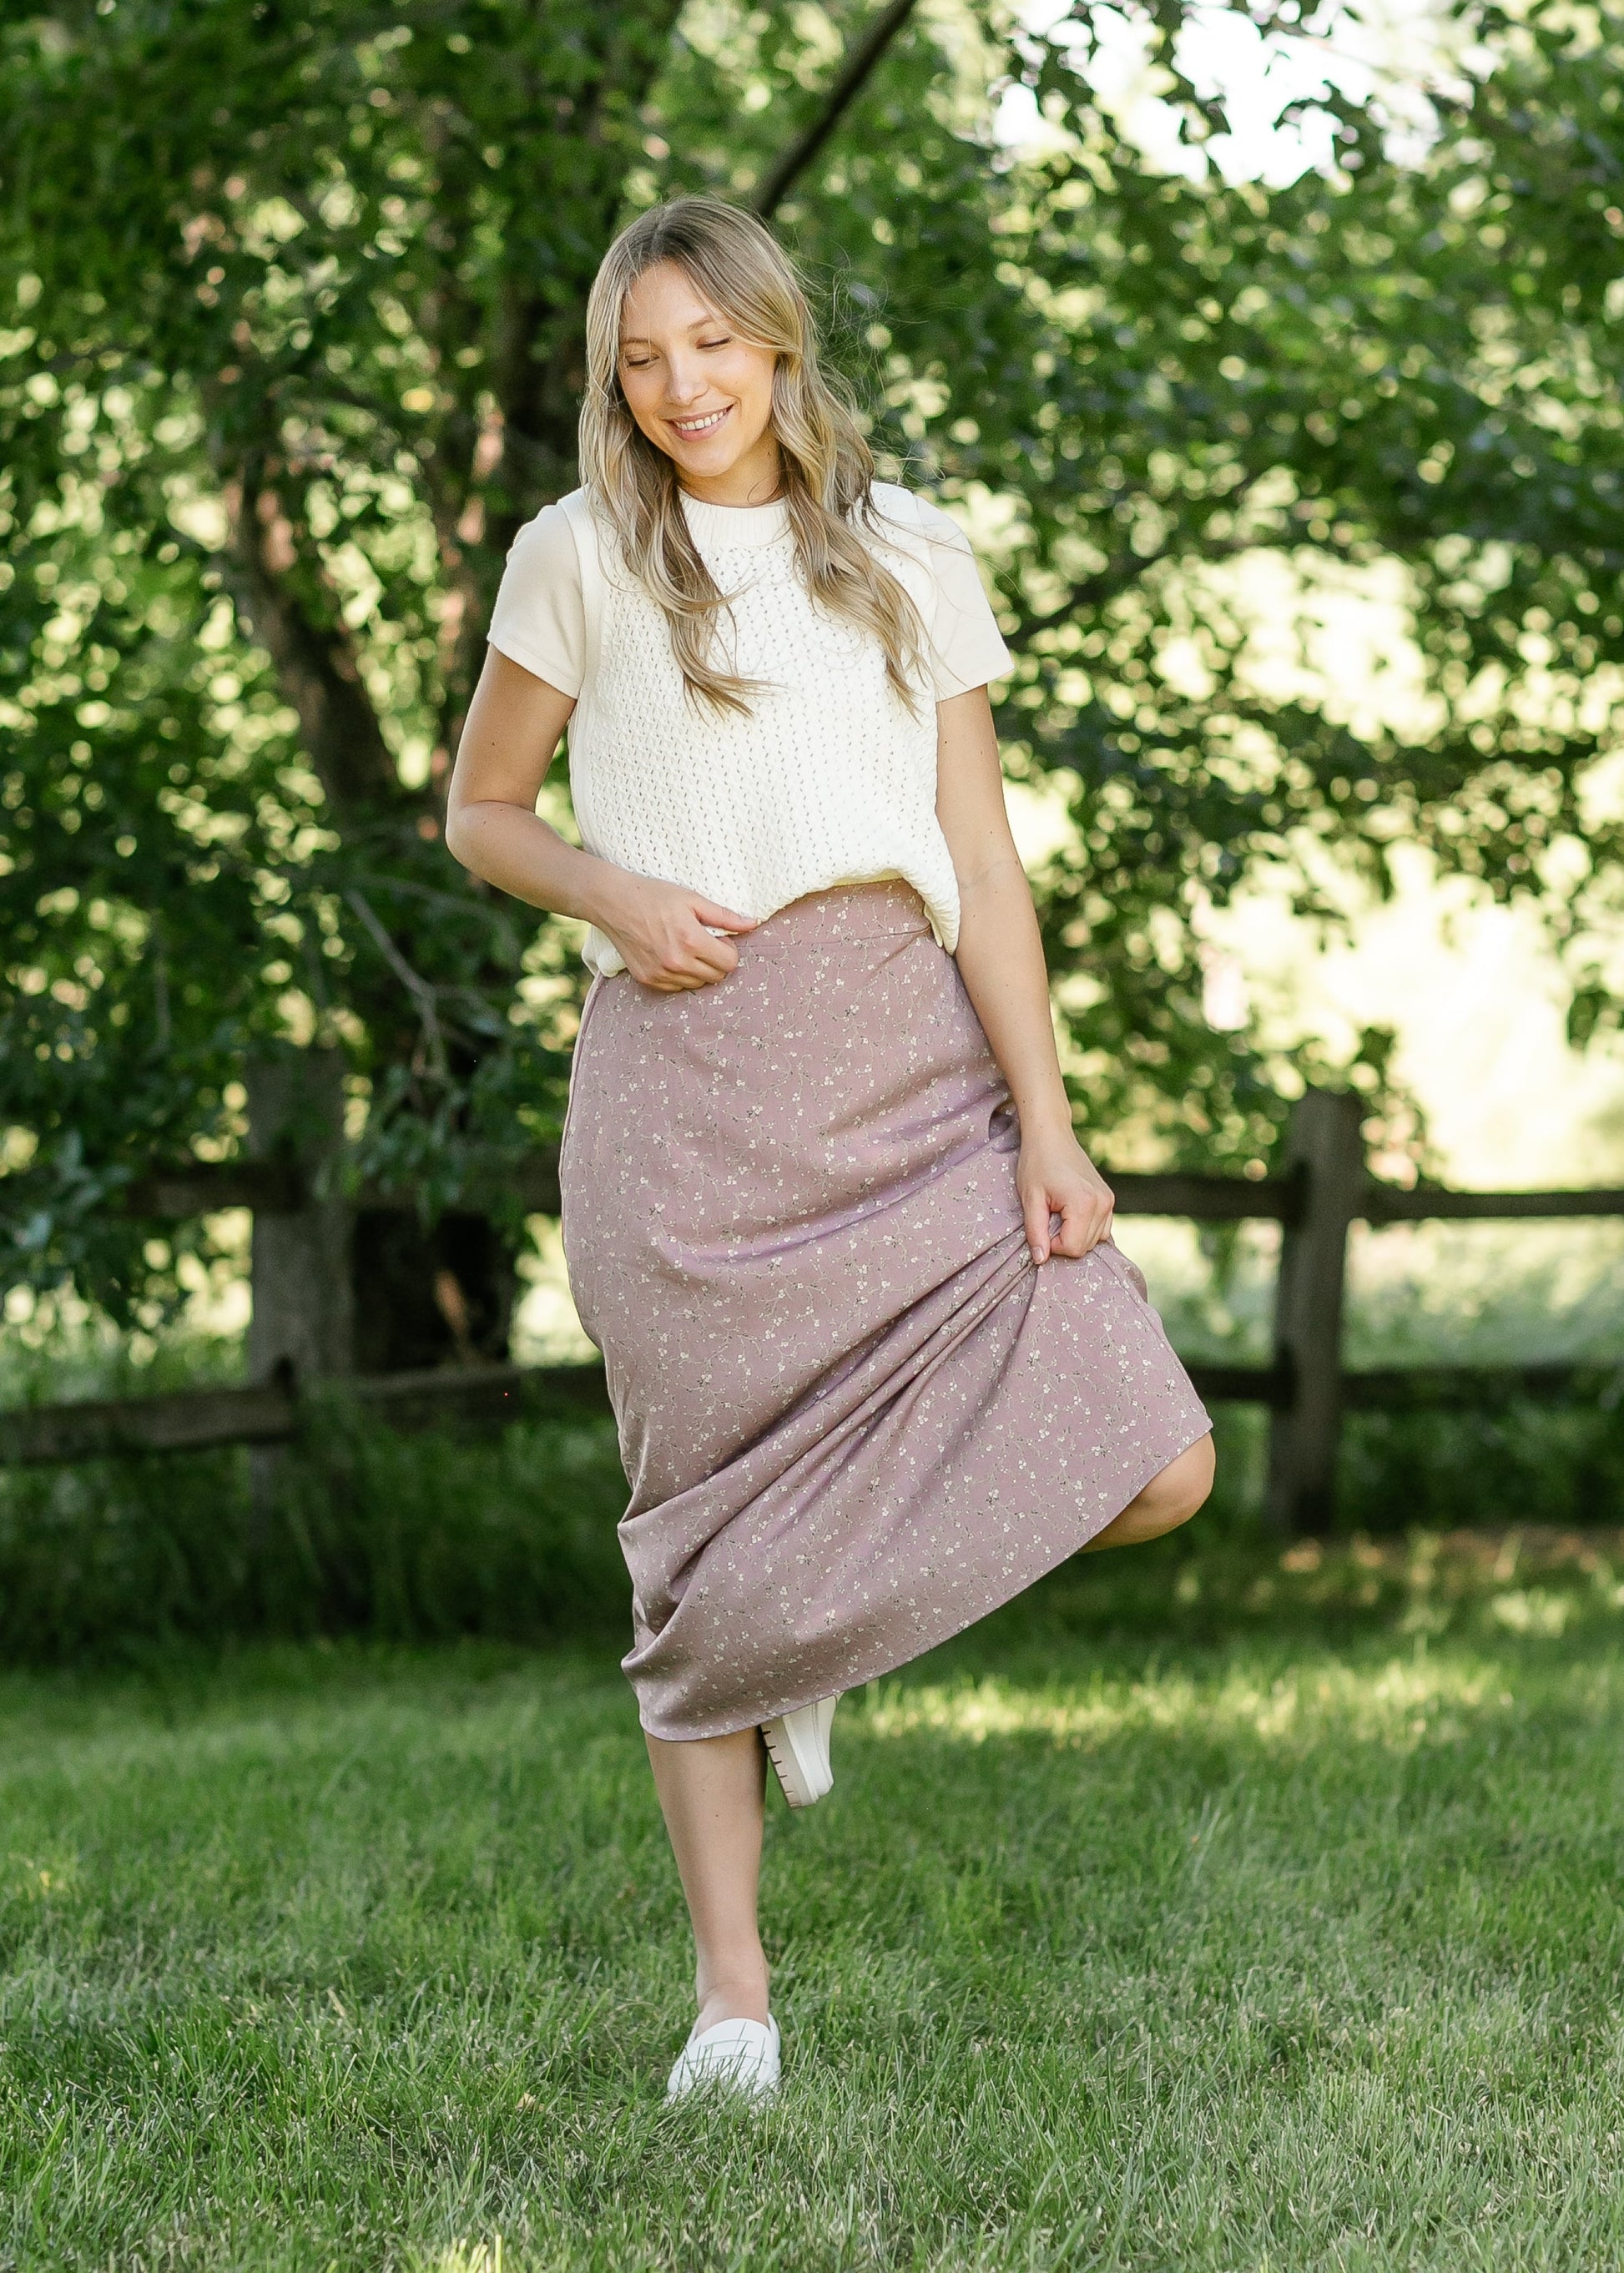 Braylyn Purple Floral Midi Skirt IC Skirts